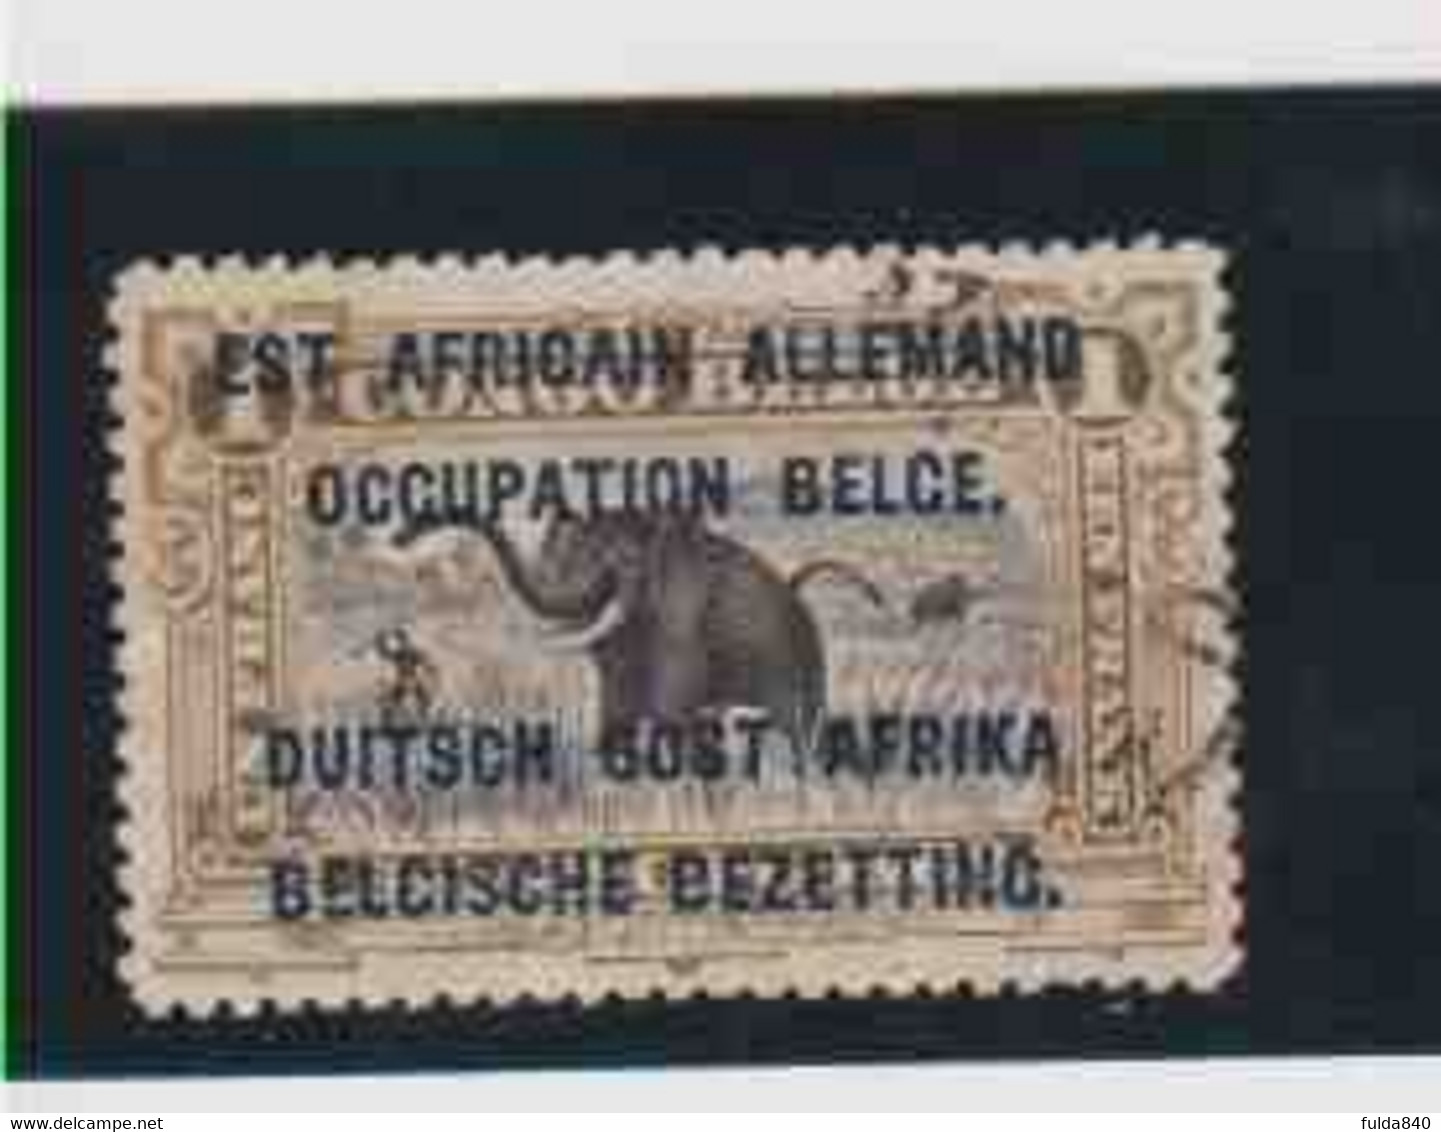 RUANDA-URUNDI. (OBP-COB) 1916 - N°34  *Est Africain Allemand, Occupation Belge*   1F.  Obli  () - Oblitérés